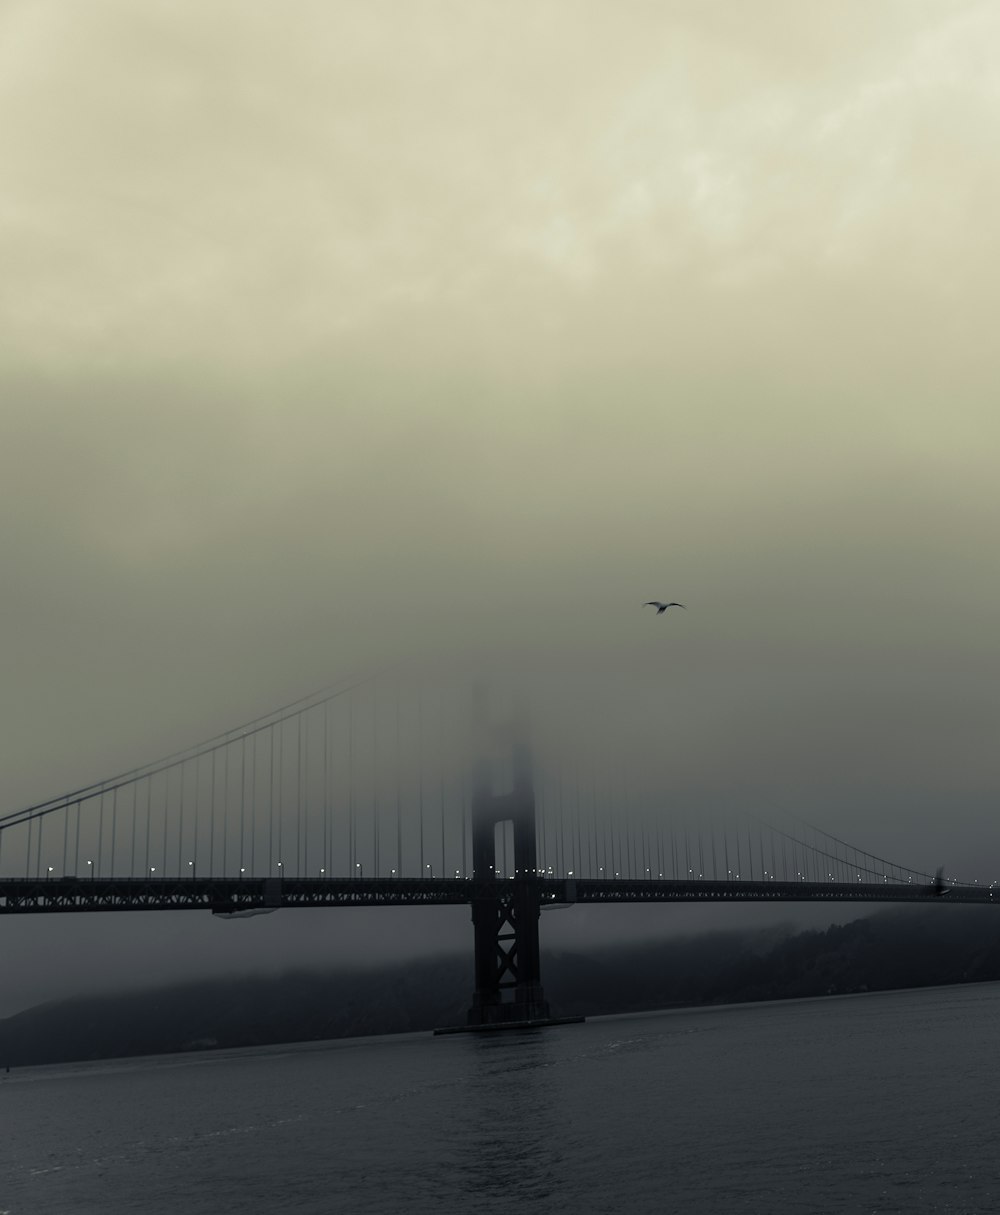 Golden State Bridge, San Francisco